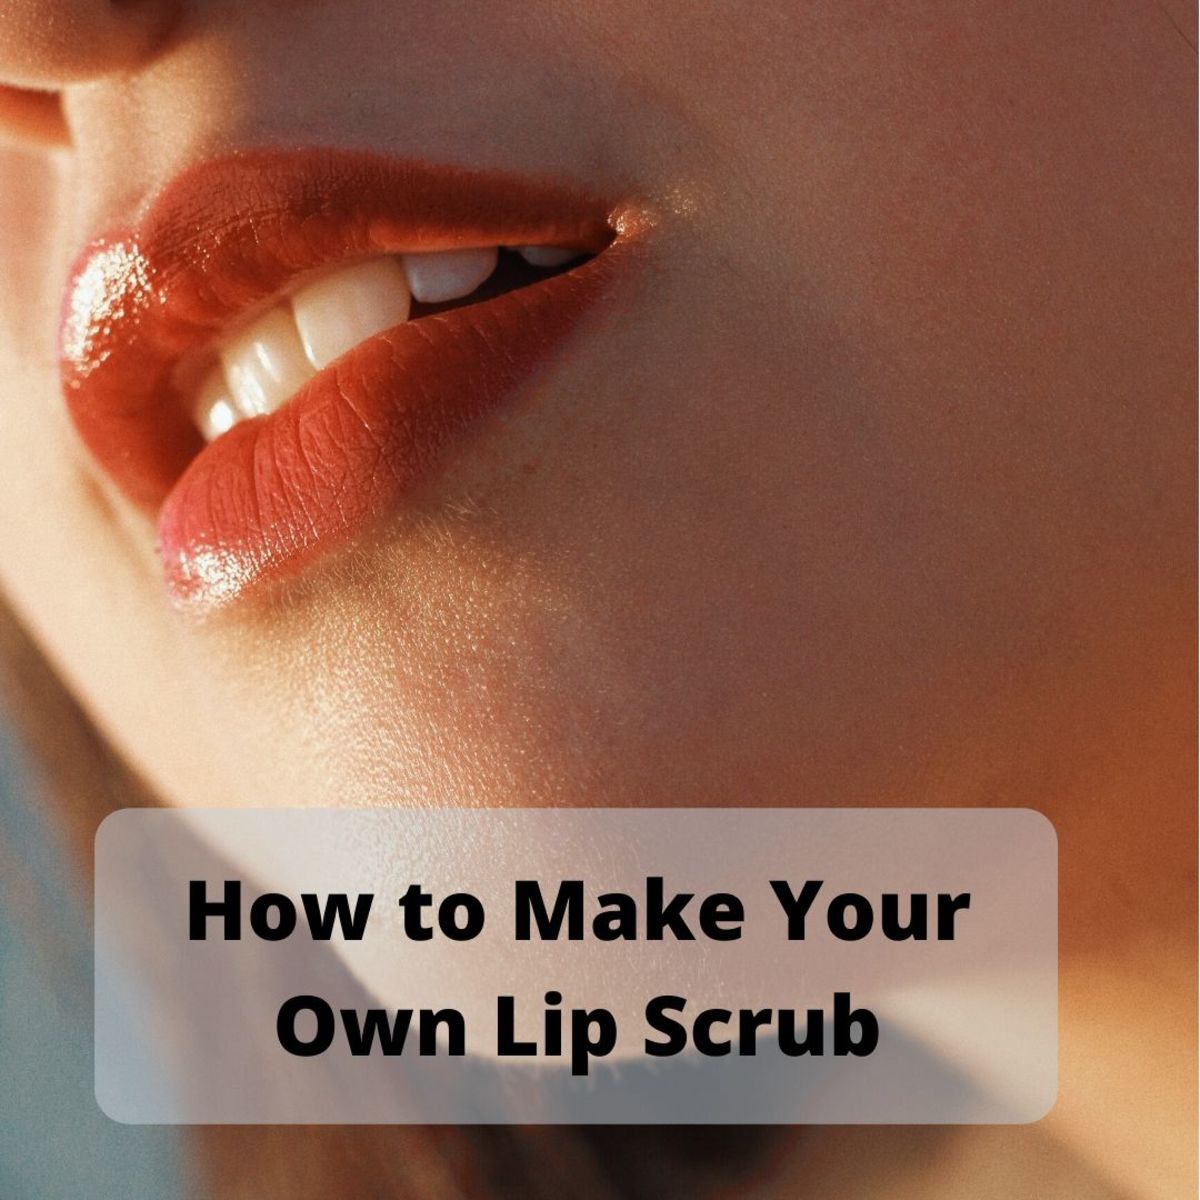 Natural ingredients make the perfect lip scrub recipe.